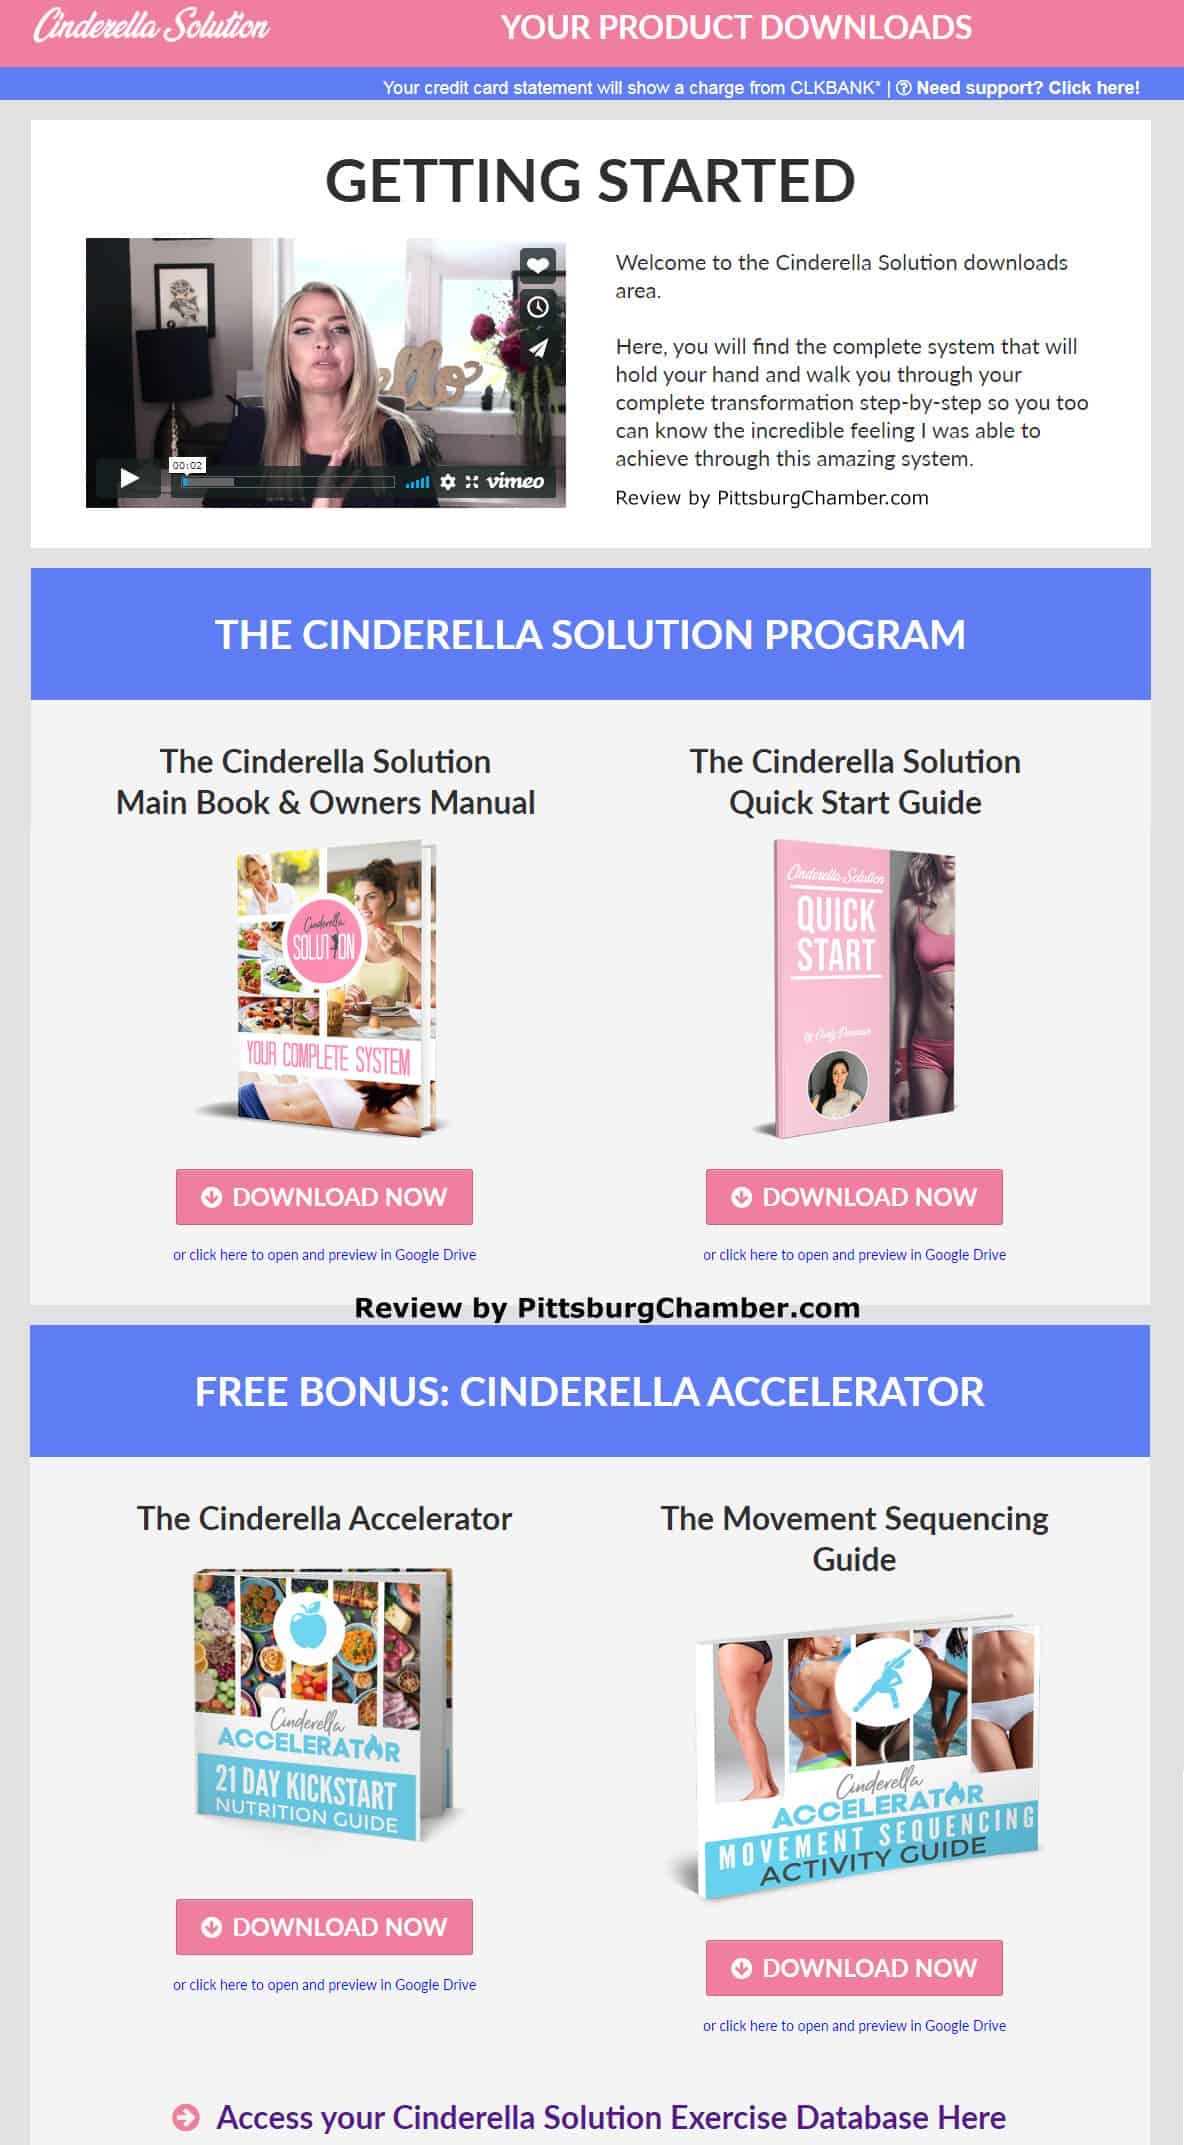 Cinderella Solution Download Page 2019 Update